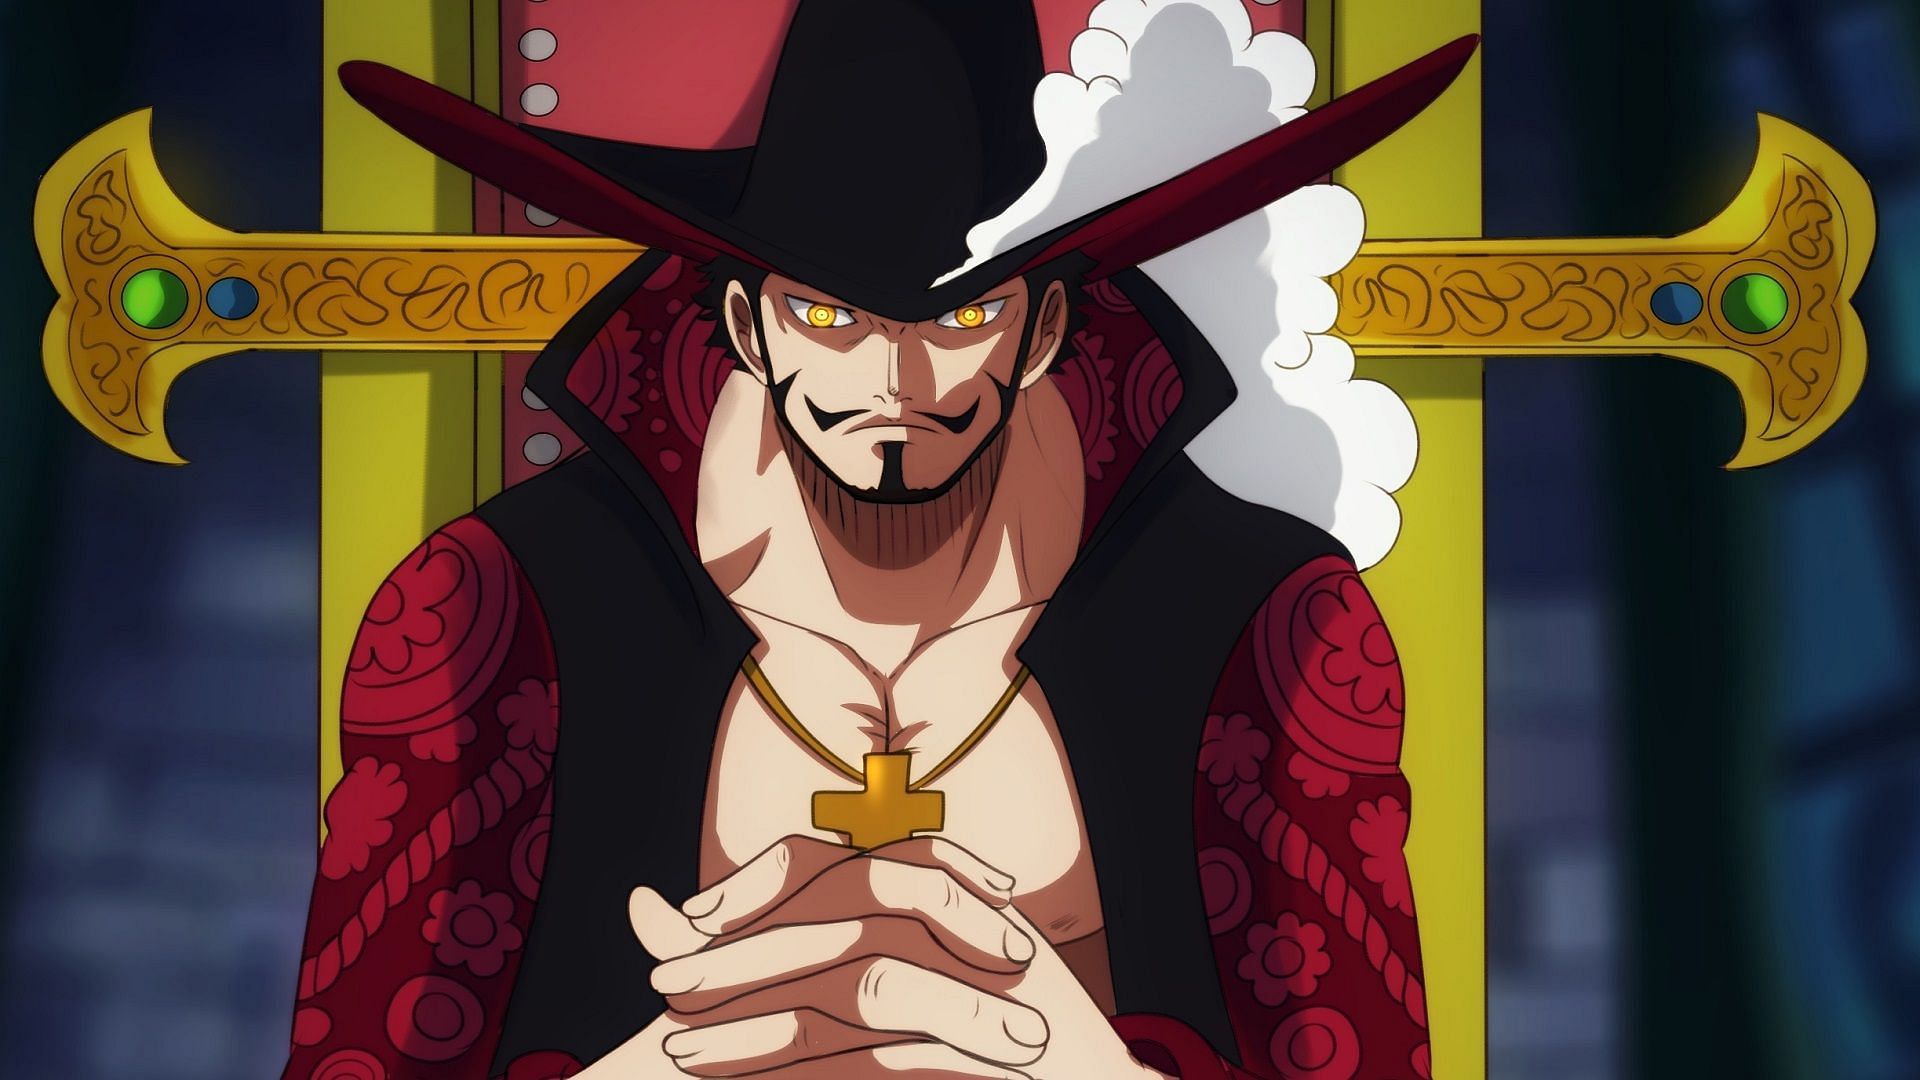 Mihawk as seen in One Piece (Image via Toei Animation, One Piece)